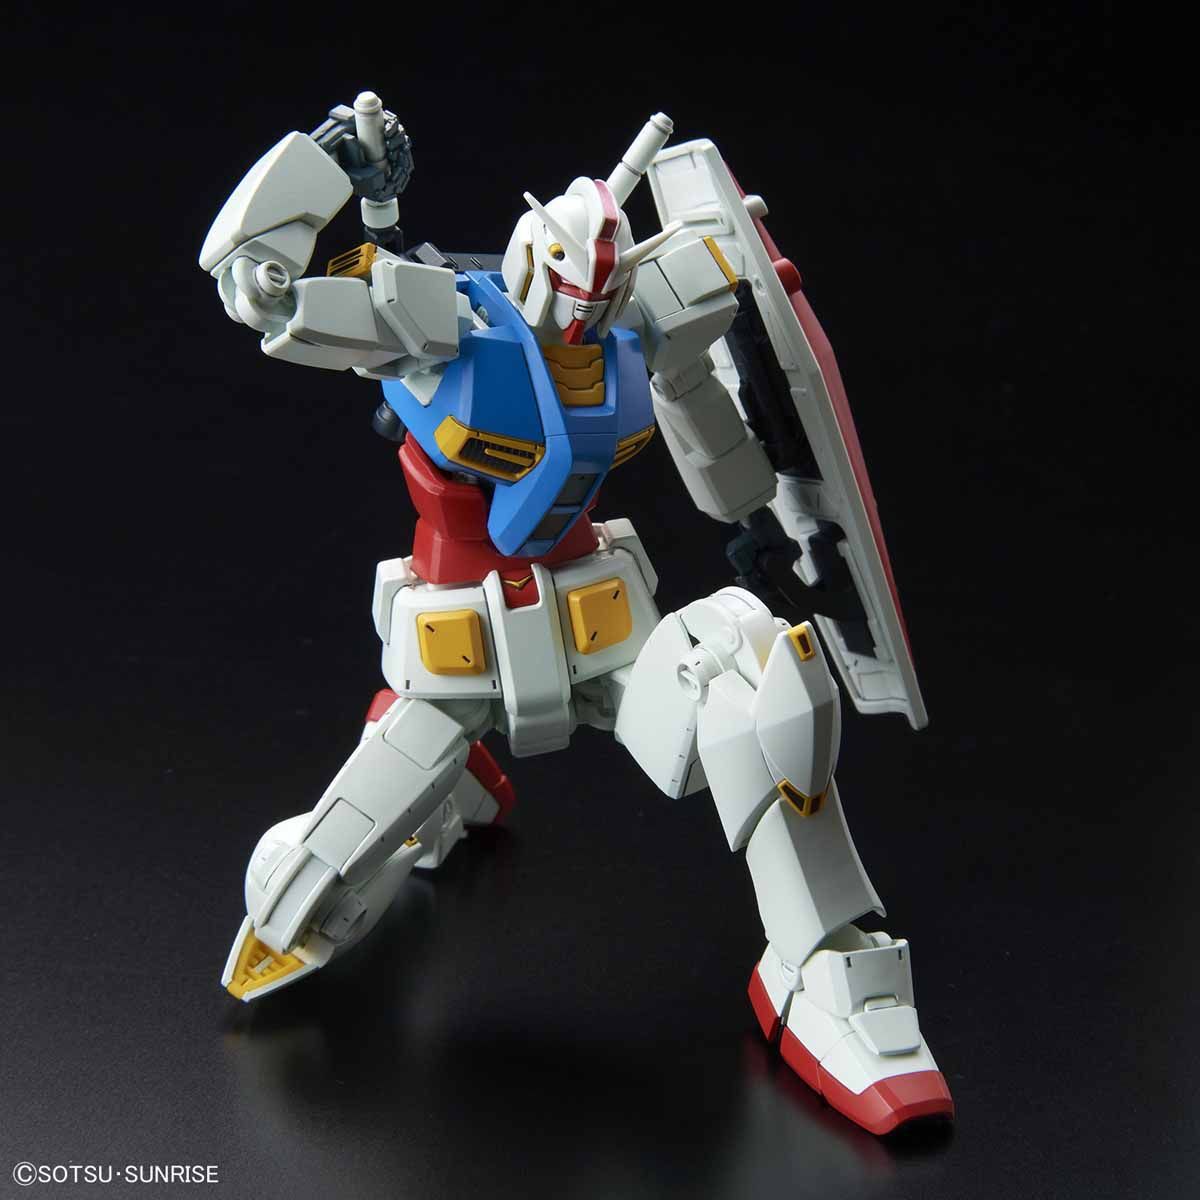 HG 1/144 Gundam G40 (Industrial Design Ver) - Glacier Hobbies - Bandai